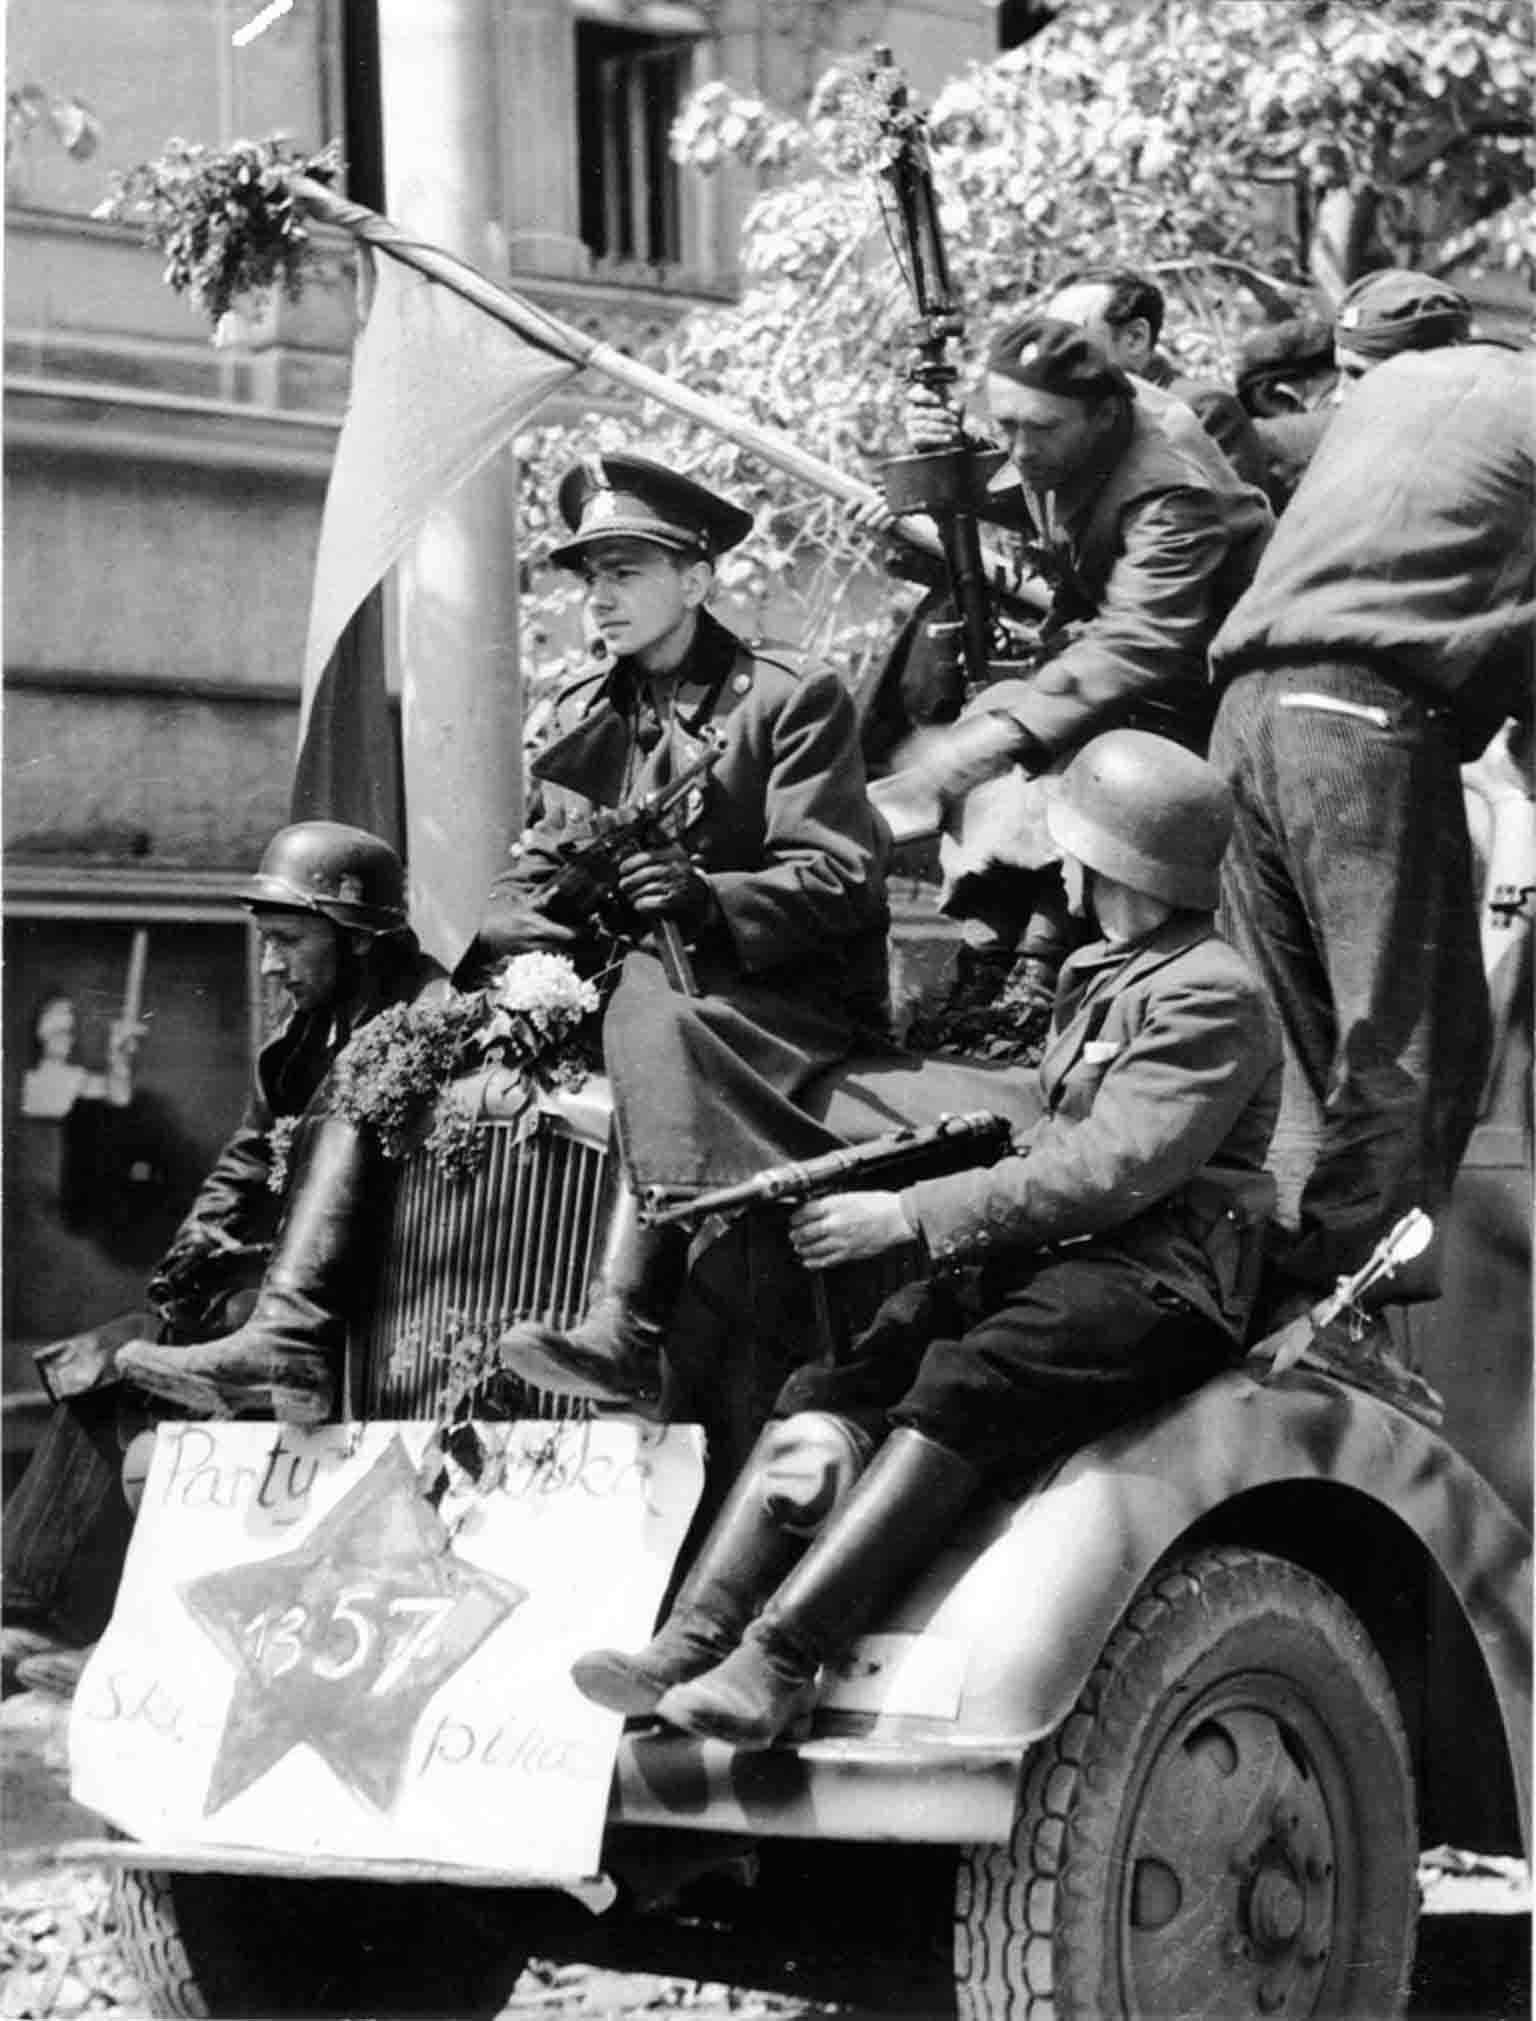 Czechoslovak resistance fighters